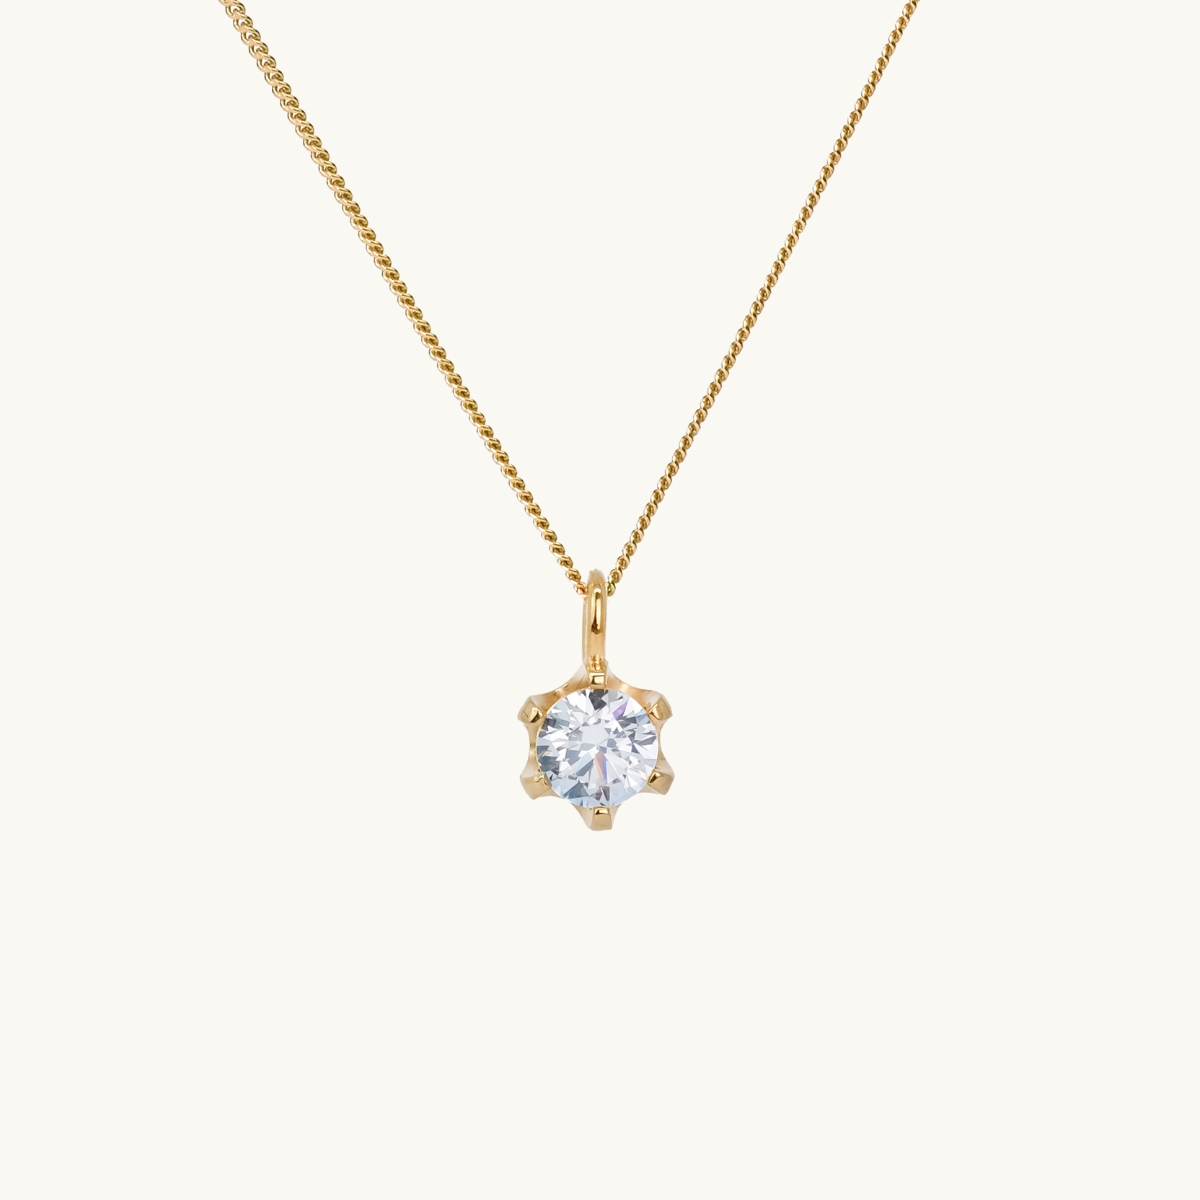 Necklace pendant gold with a white diamond, princess